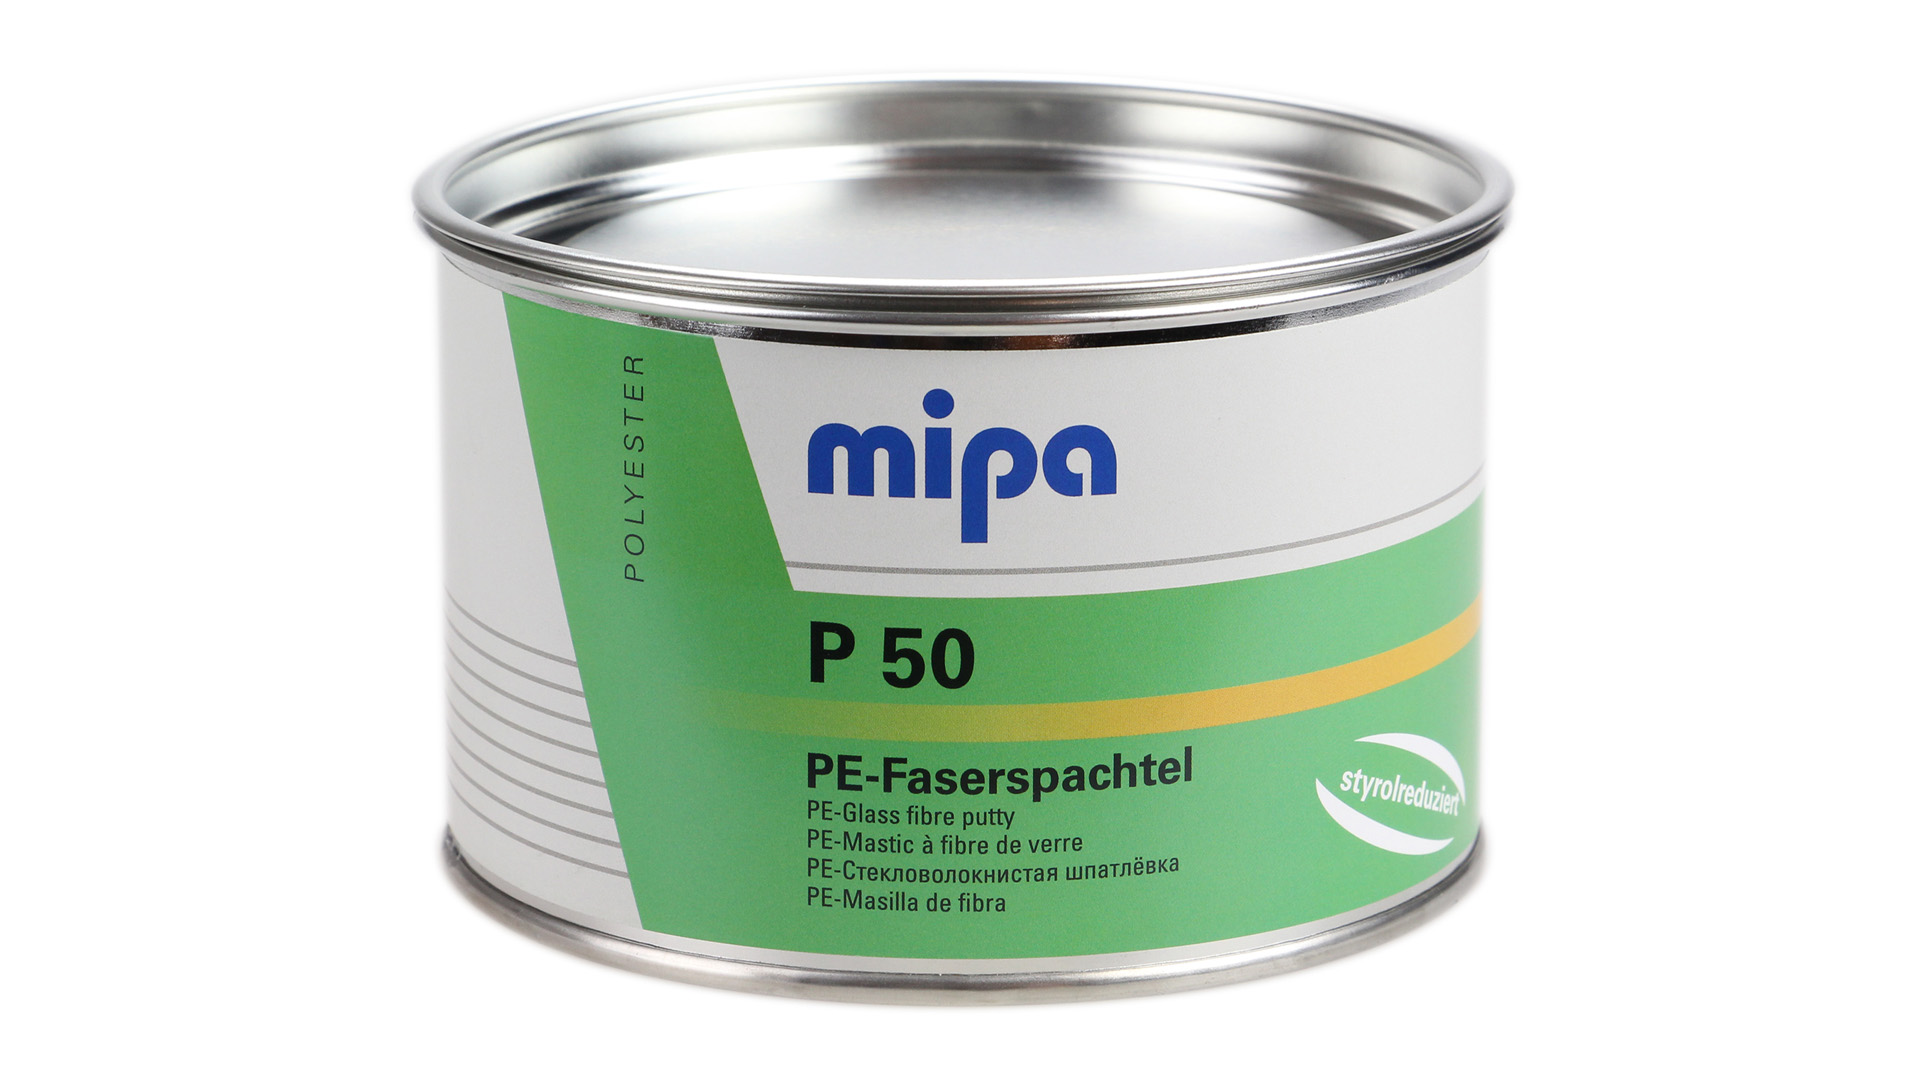 Mipa P 50 styrolreduziert - PE-Faserspachtel (875g) inkl. Härter